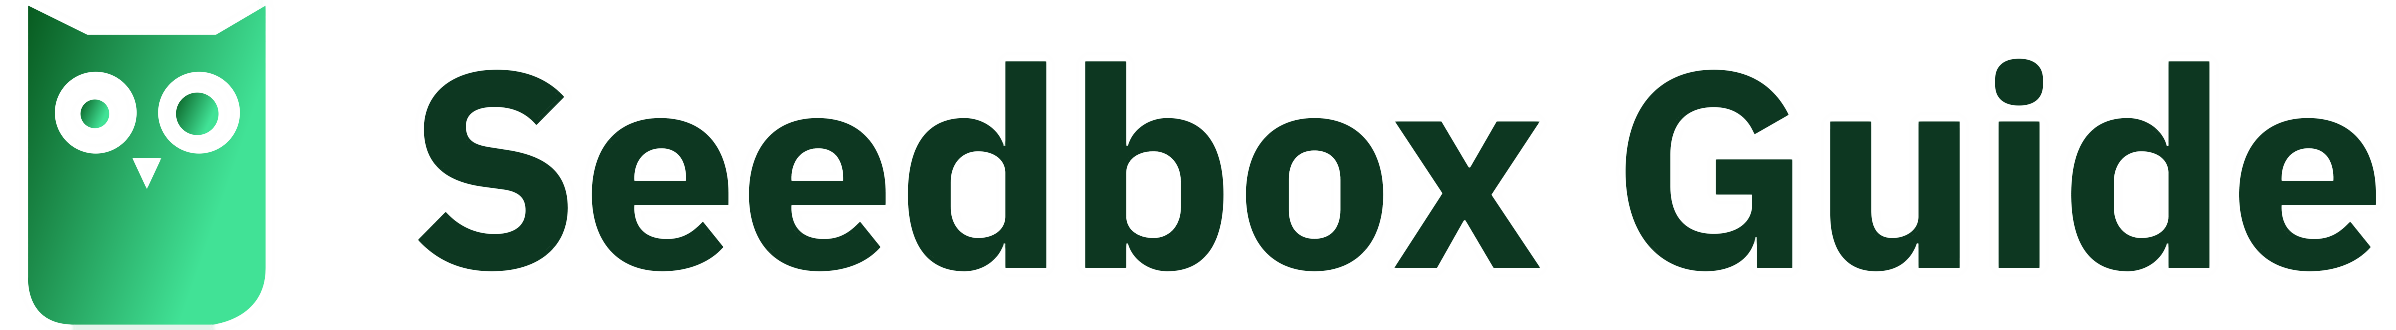 Seedbox Guide logo